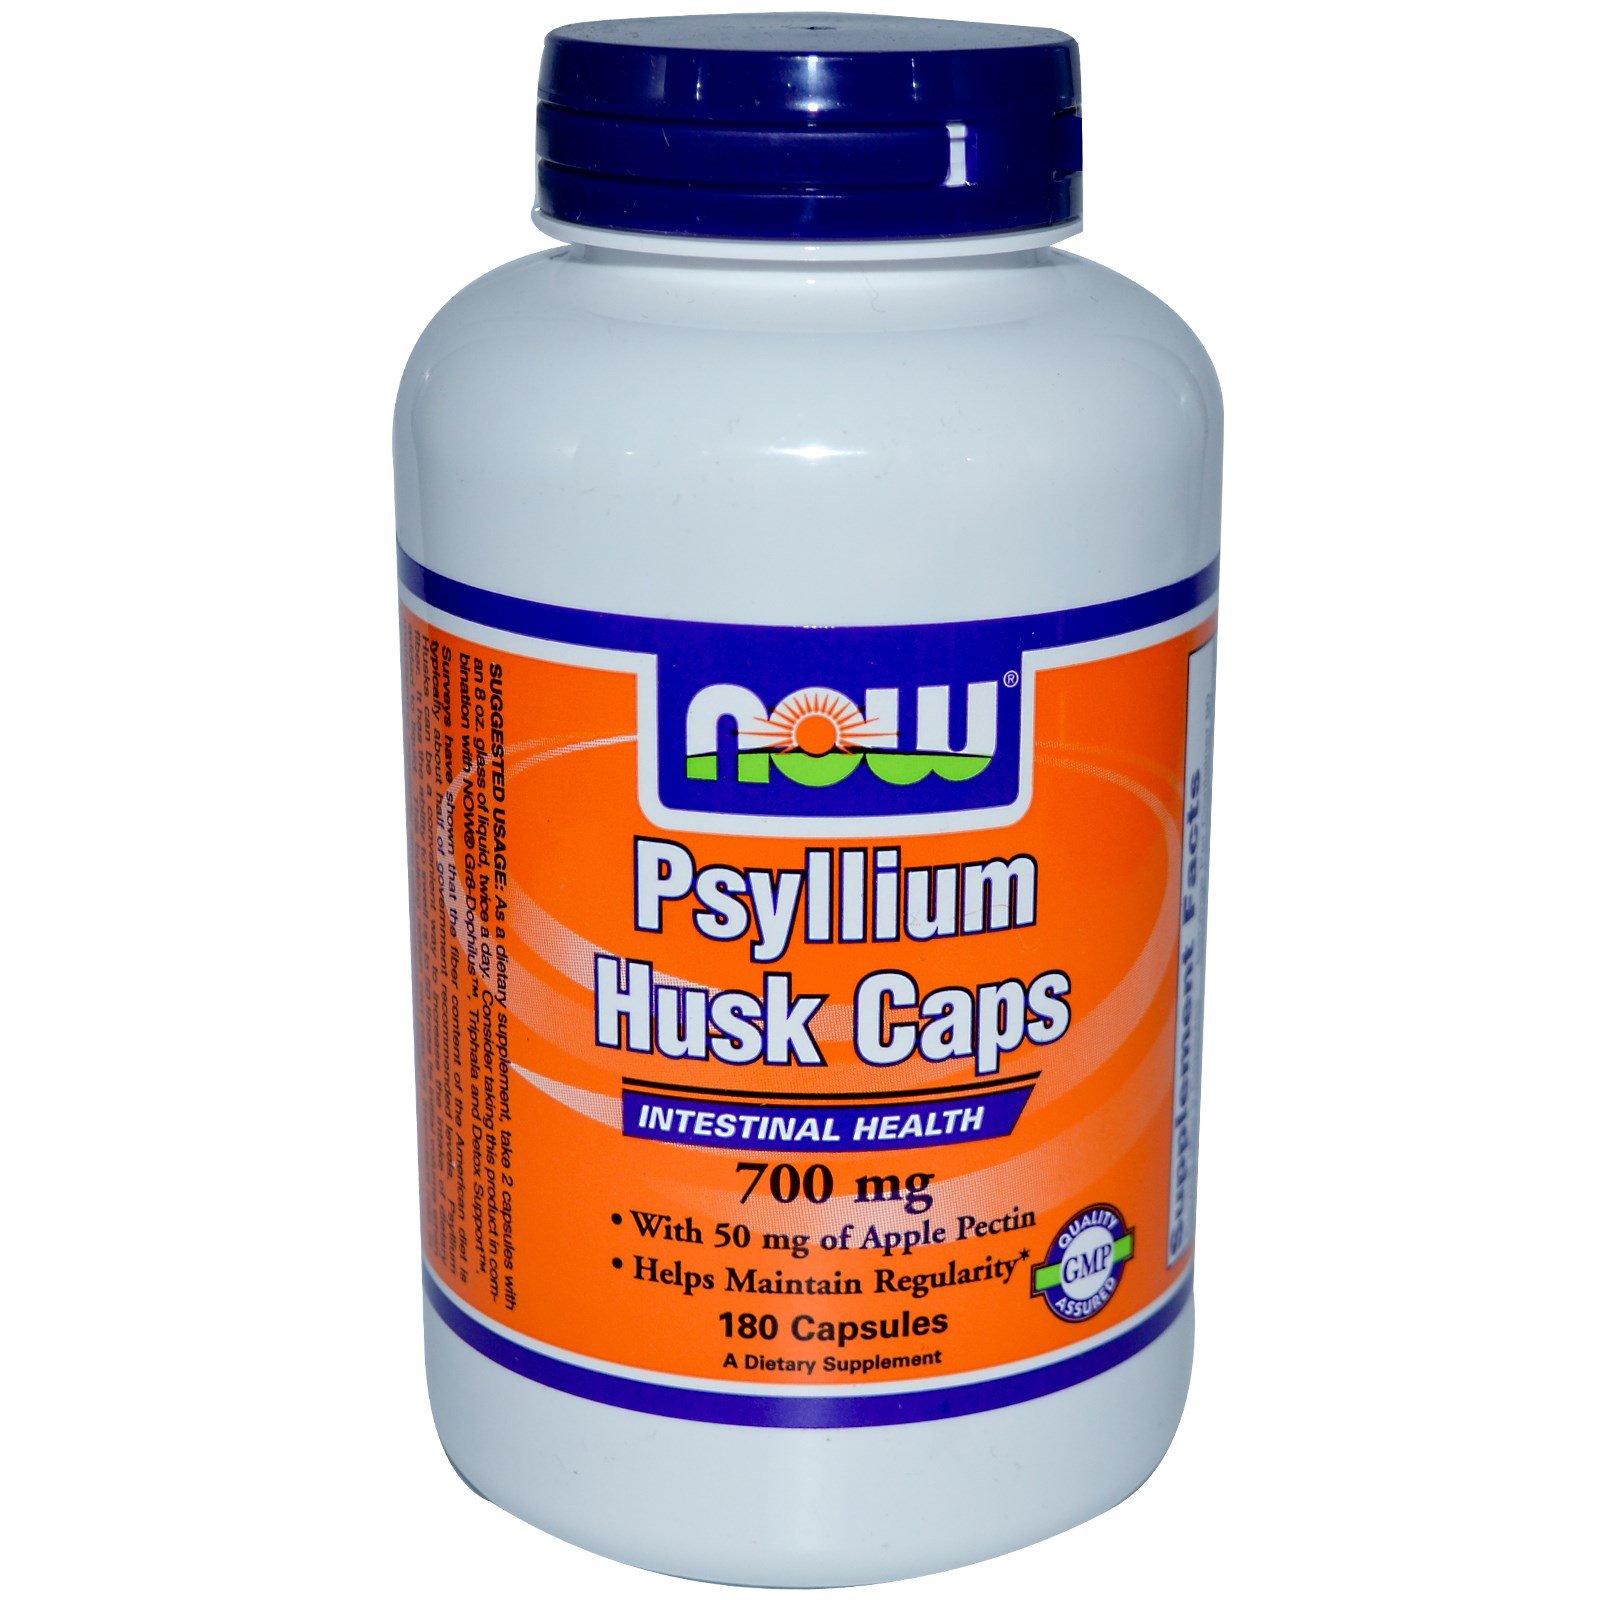 Psyllium Husk Caps, 180 pcs, Now. Special supplements. 